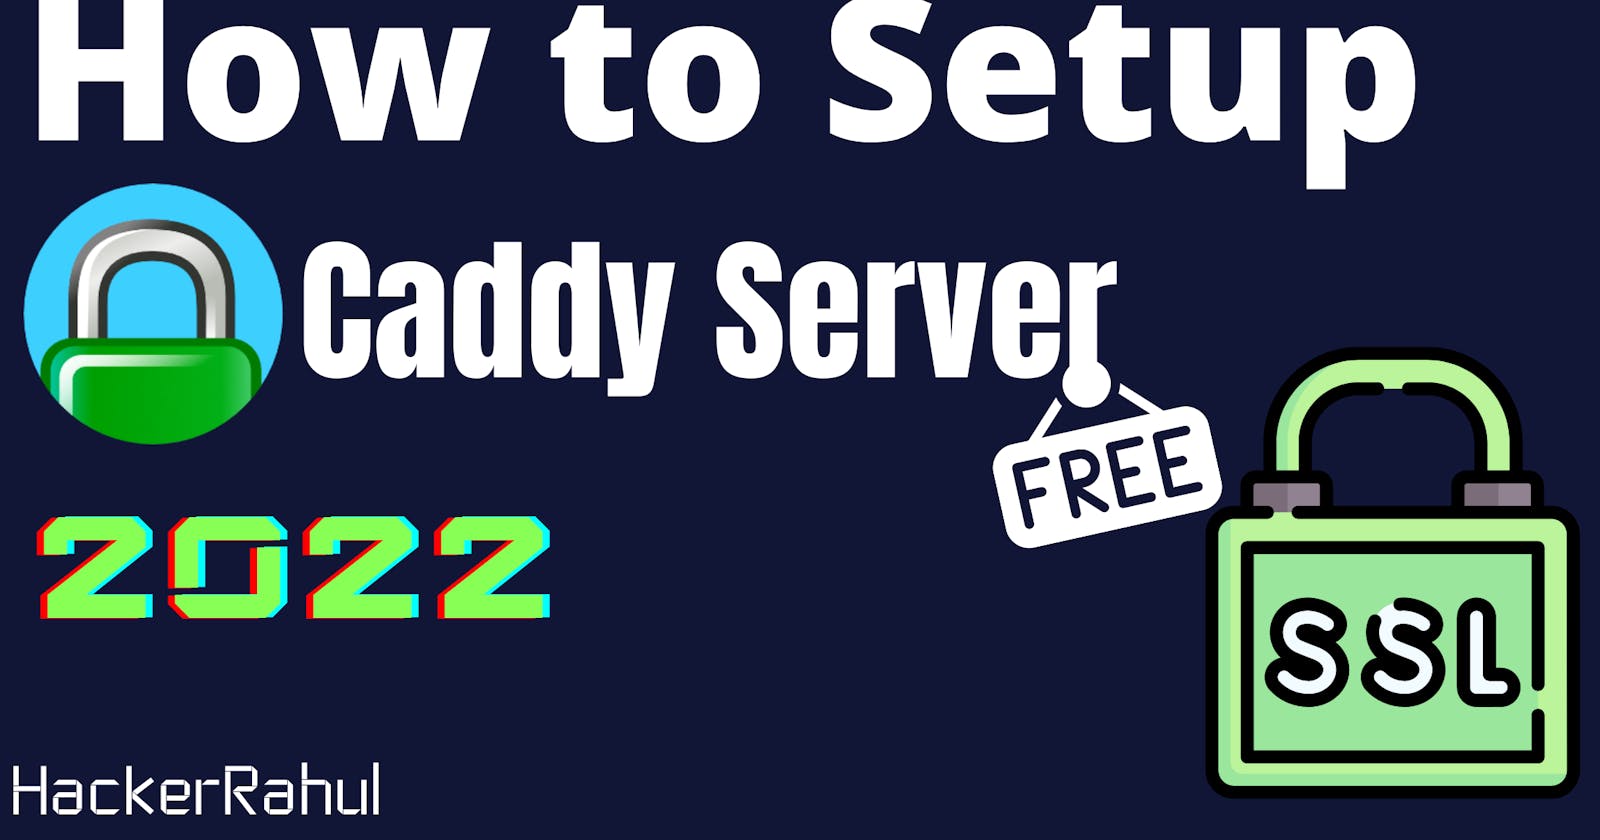 Beginner guide to Caddy Server | 2022 | HackerRahul